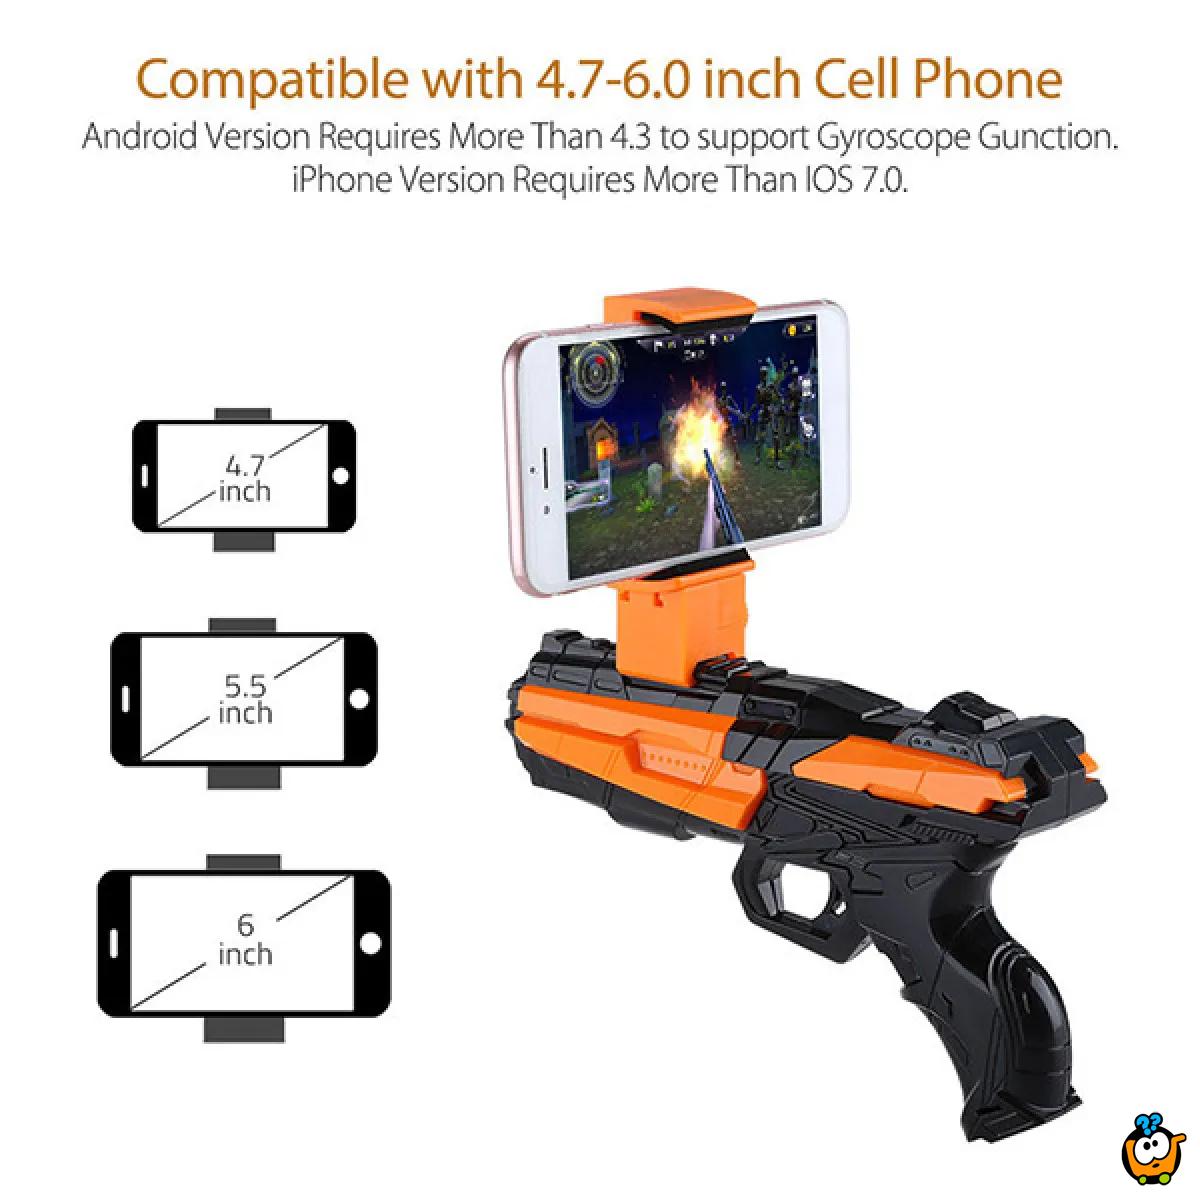 AR Toy Gun - Pištolj za virtualno igranje igrica na telefonu